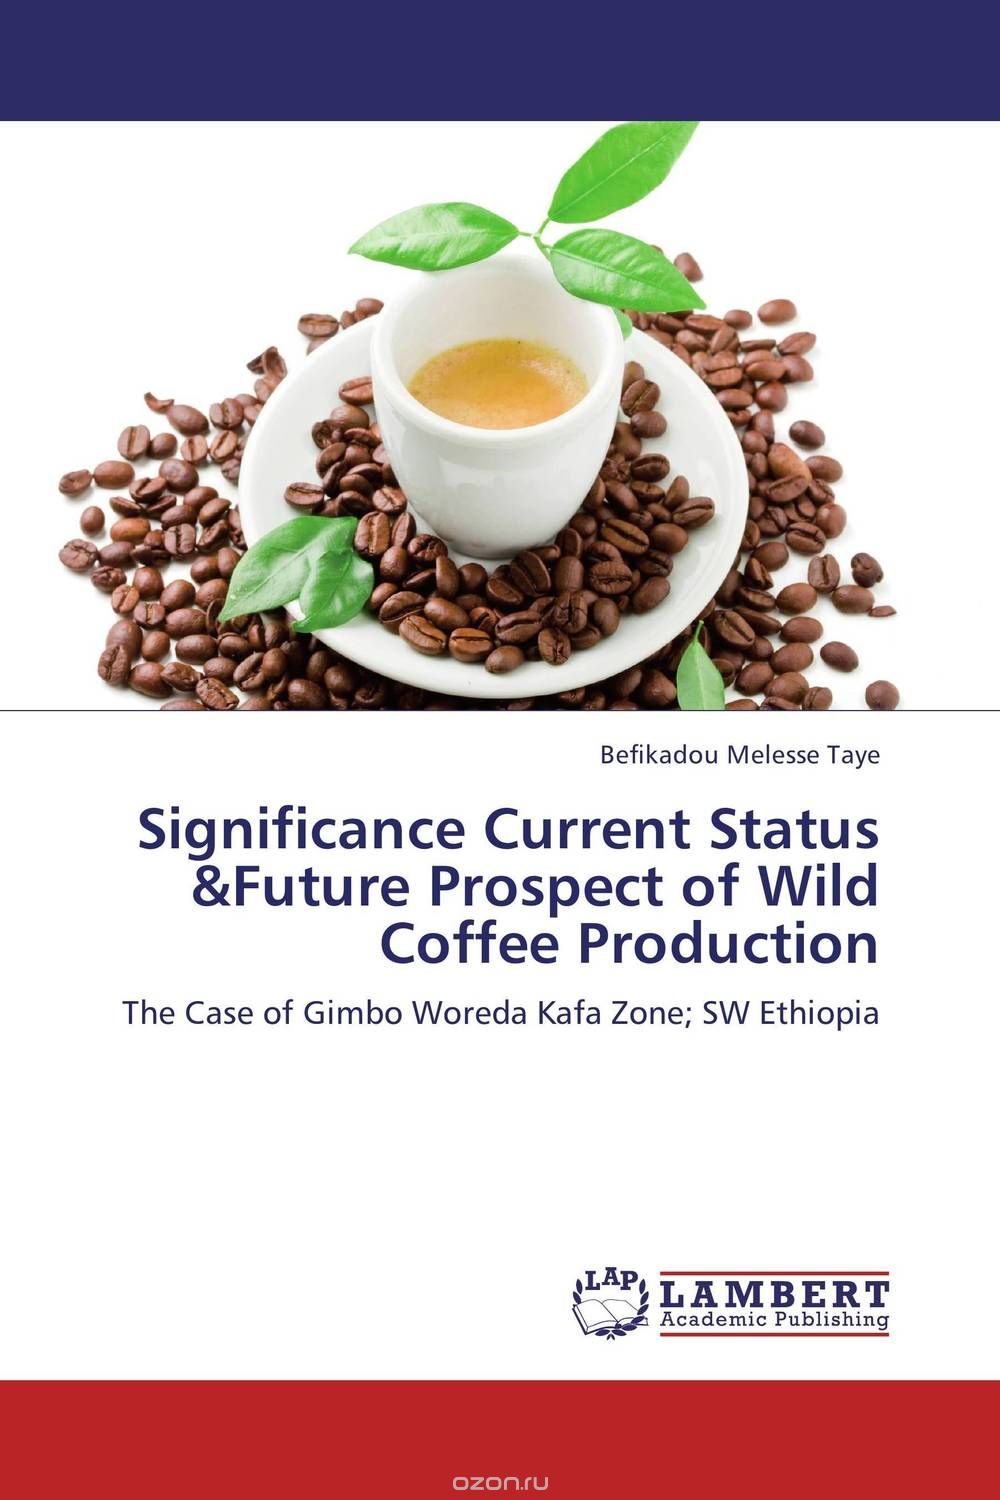 Скачать книгу "Significance Current Status &Future Prospect of Wild Coffee Production"